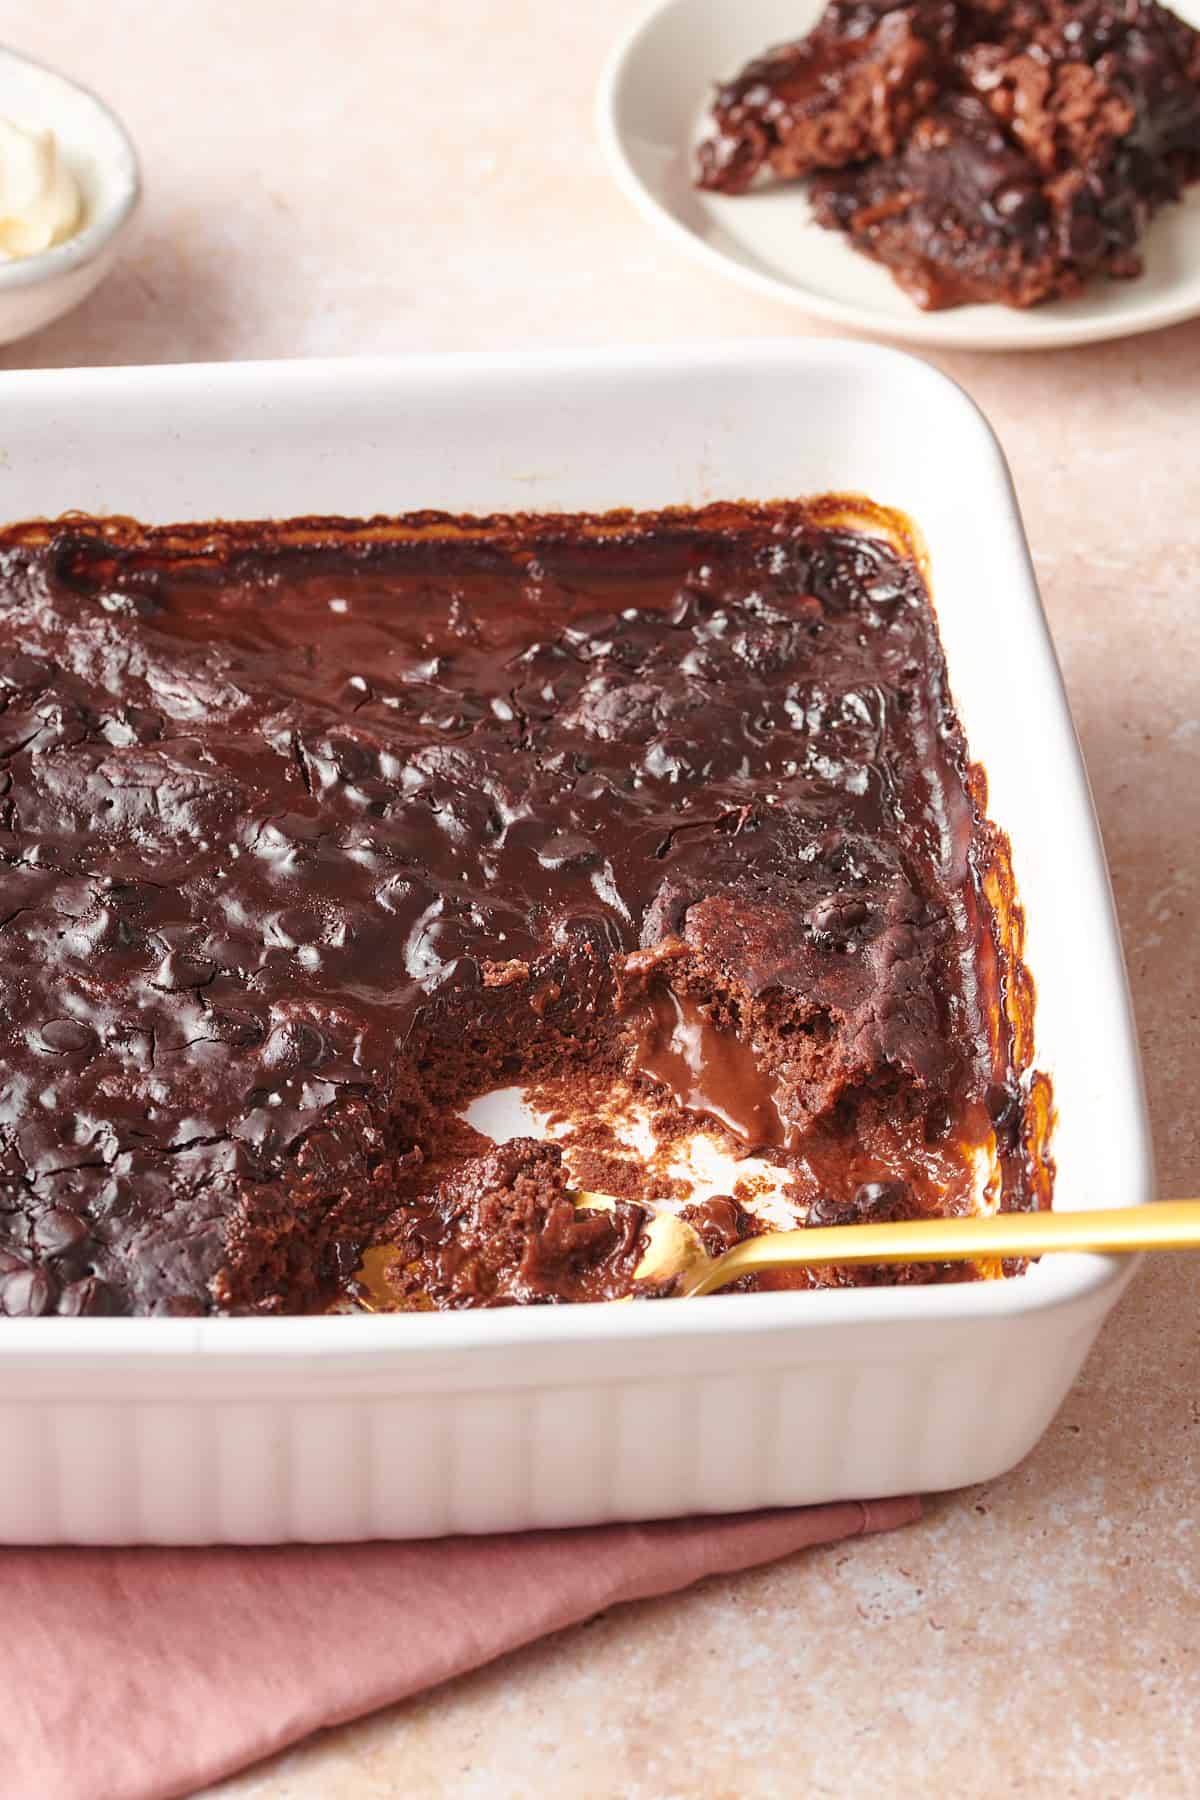 8x8 baking dish with chocolate pudding cake.